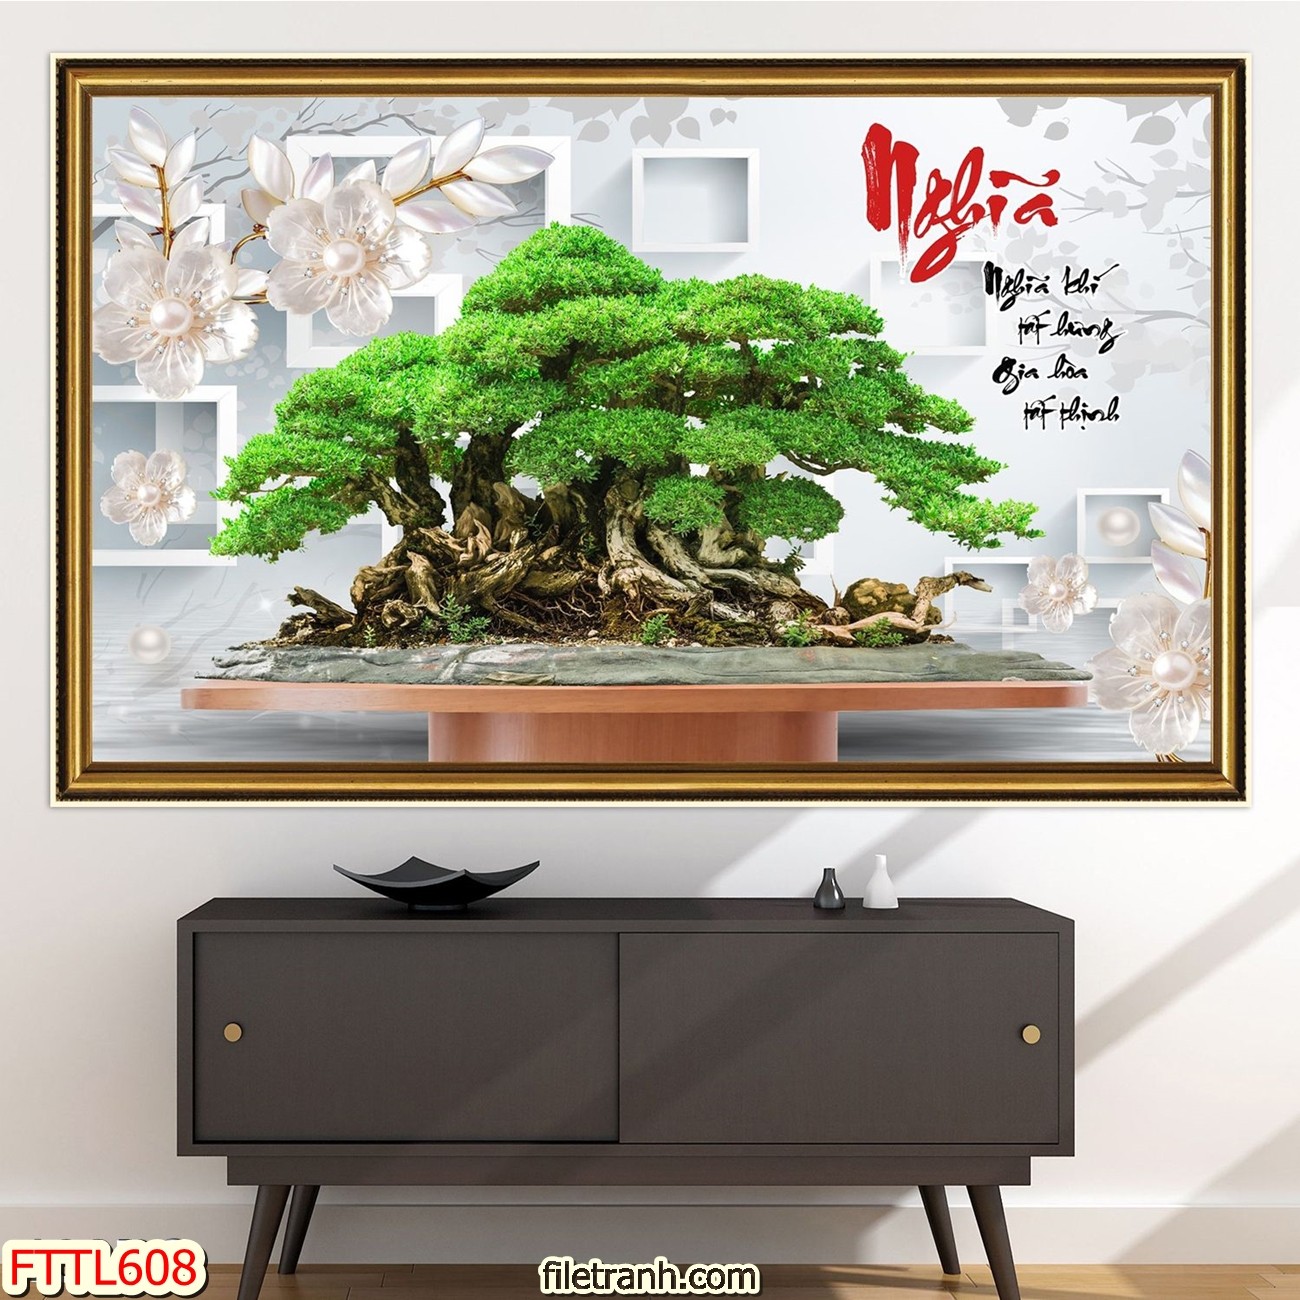 https://filetranh.com/file-tranh-chau-mai-bonsai/file-tranh-chau-mai-bonsai-fttl608.html